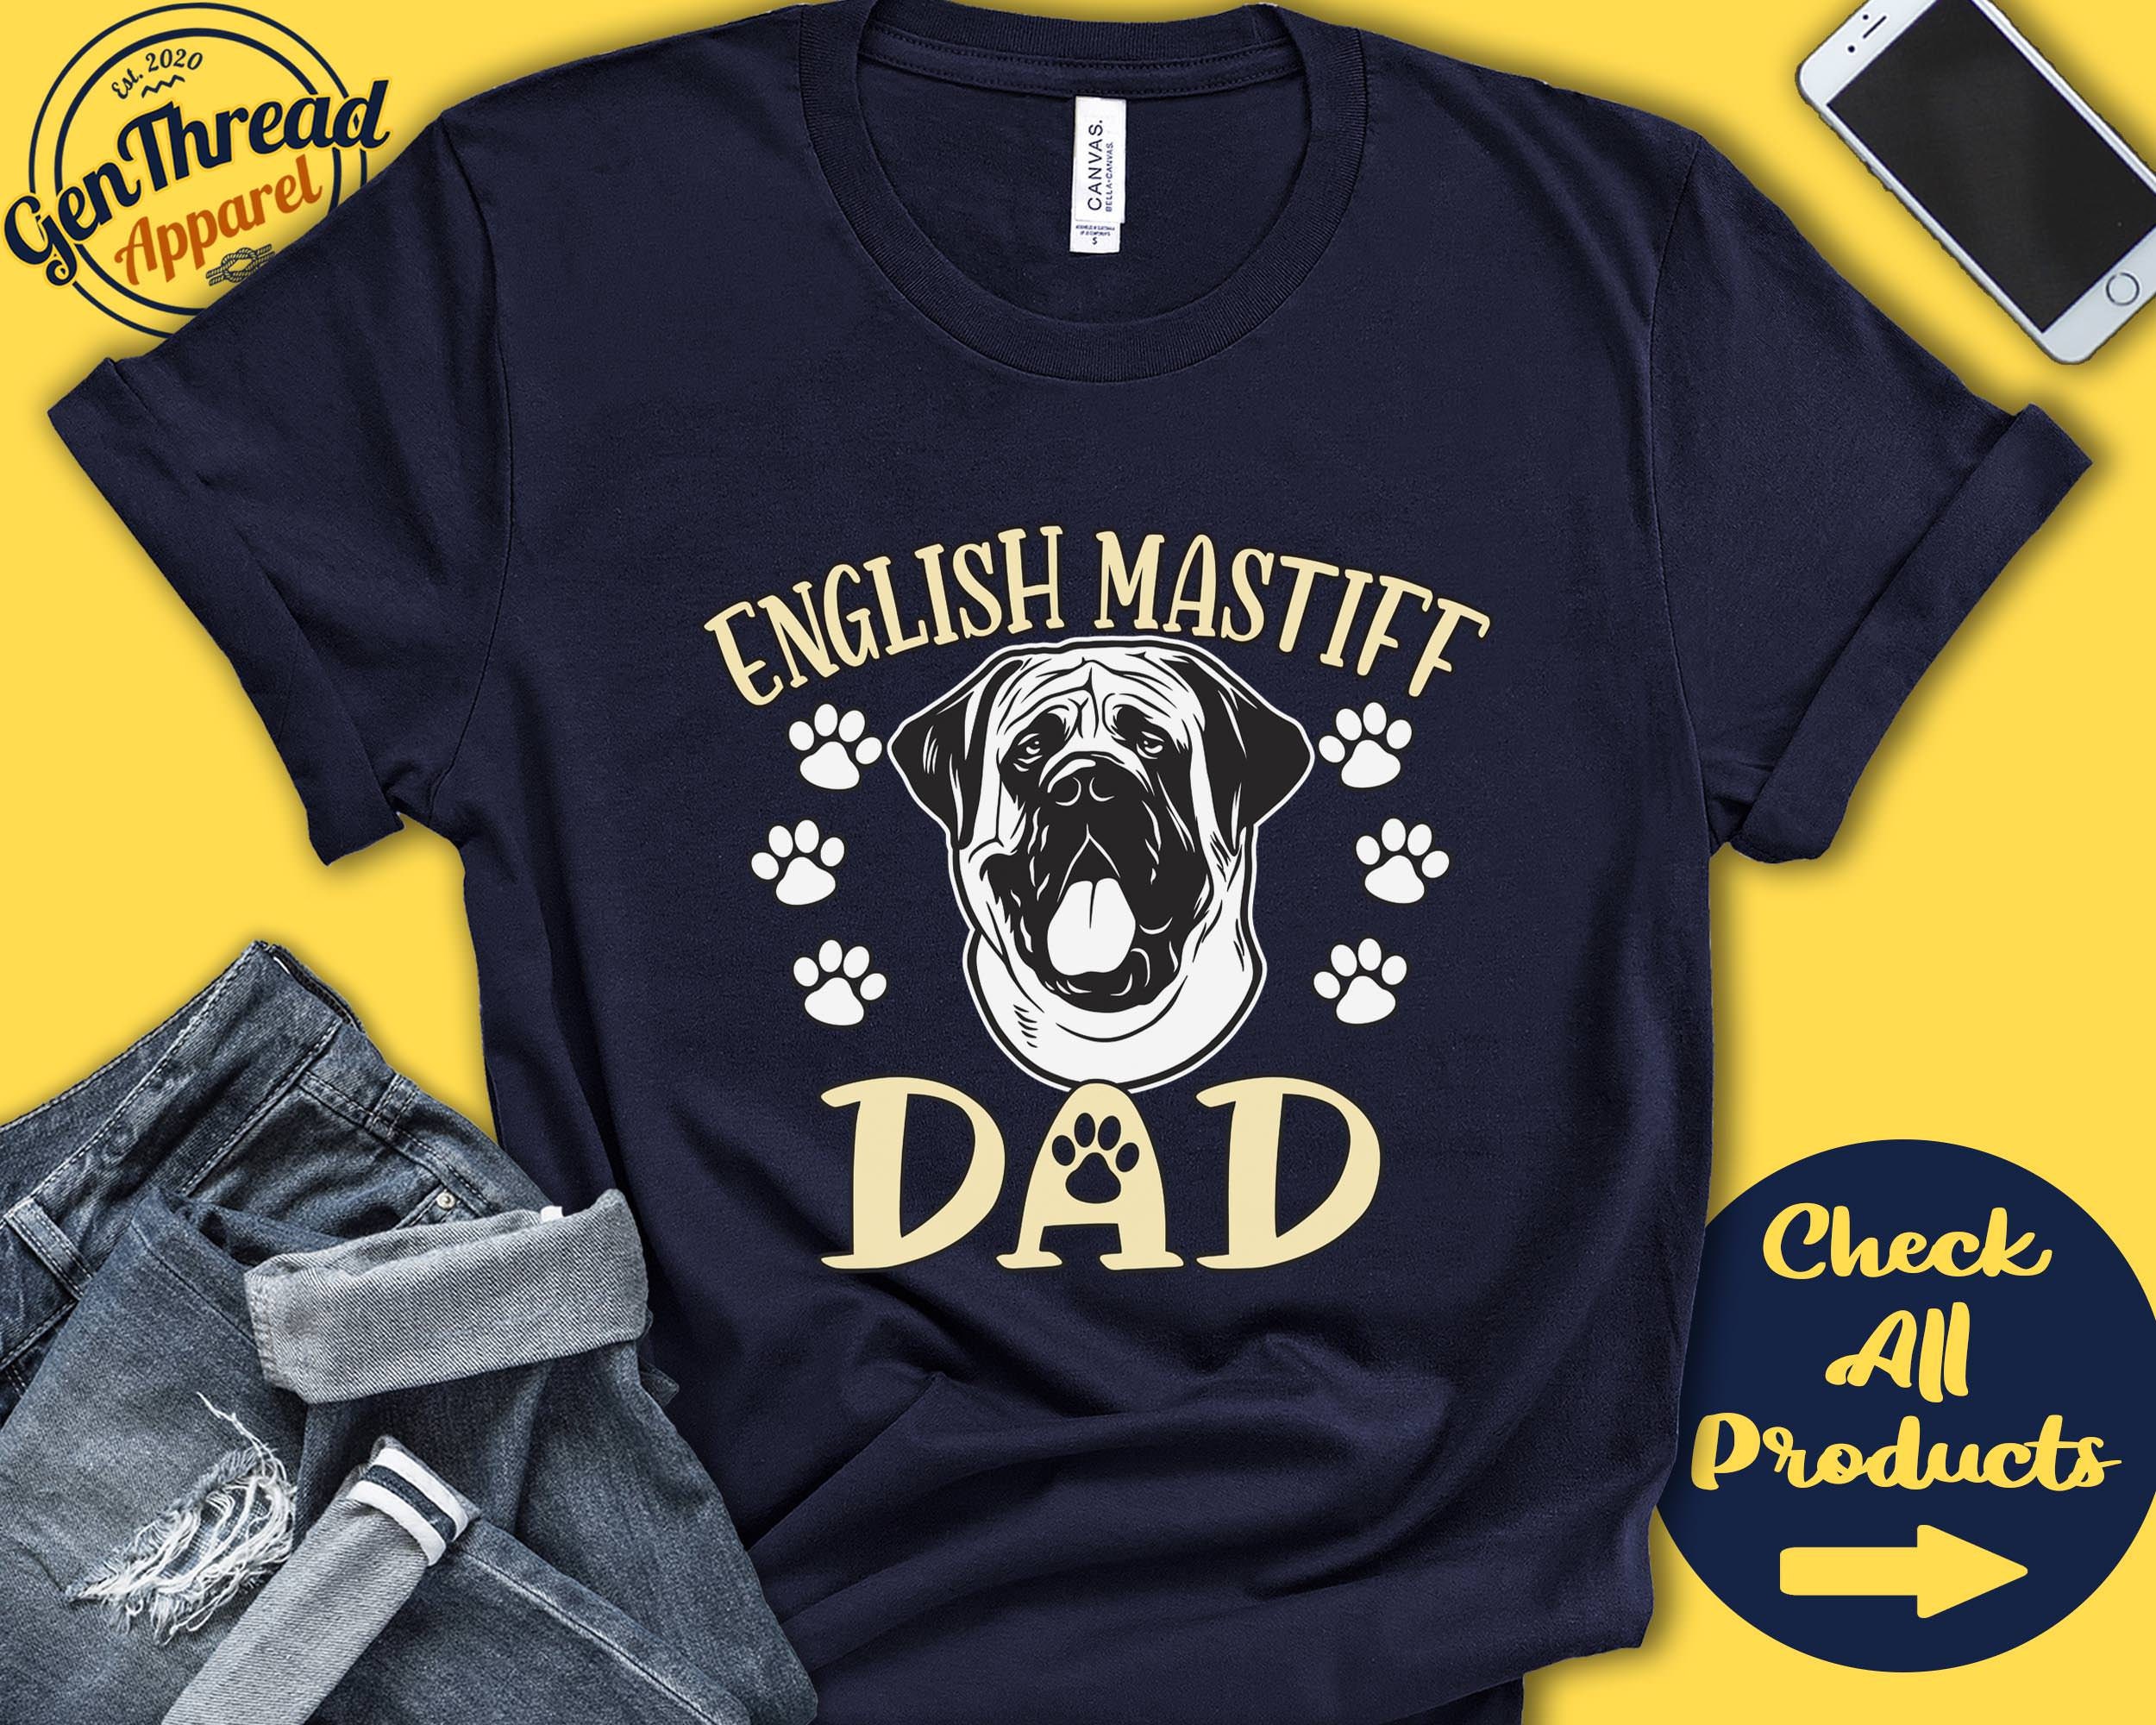 are english mastiffs polite